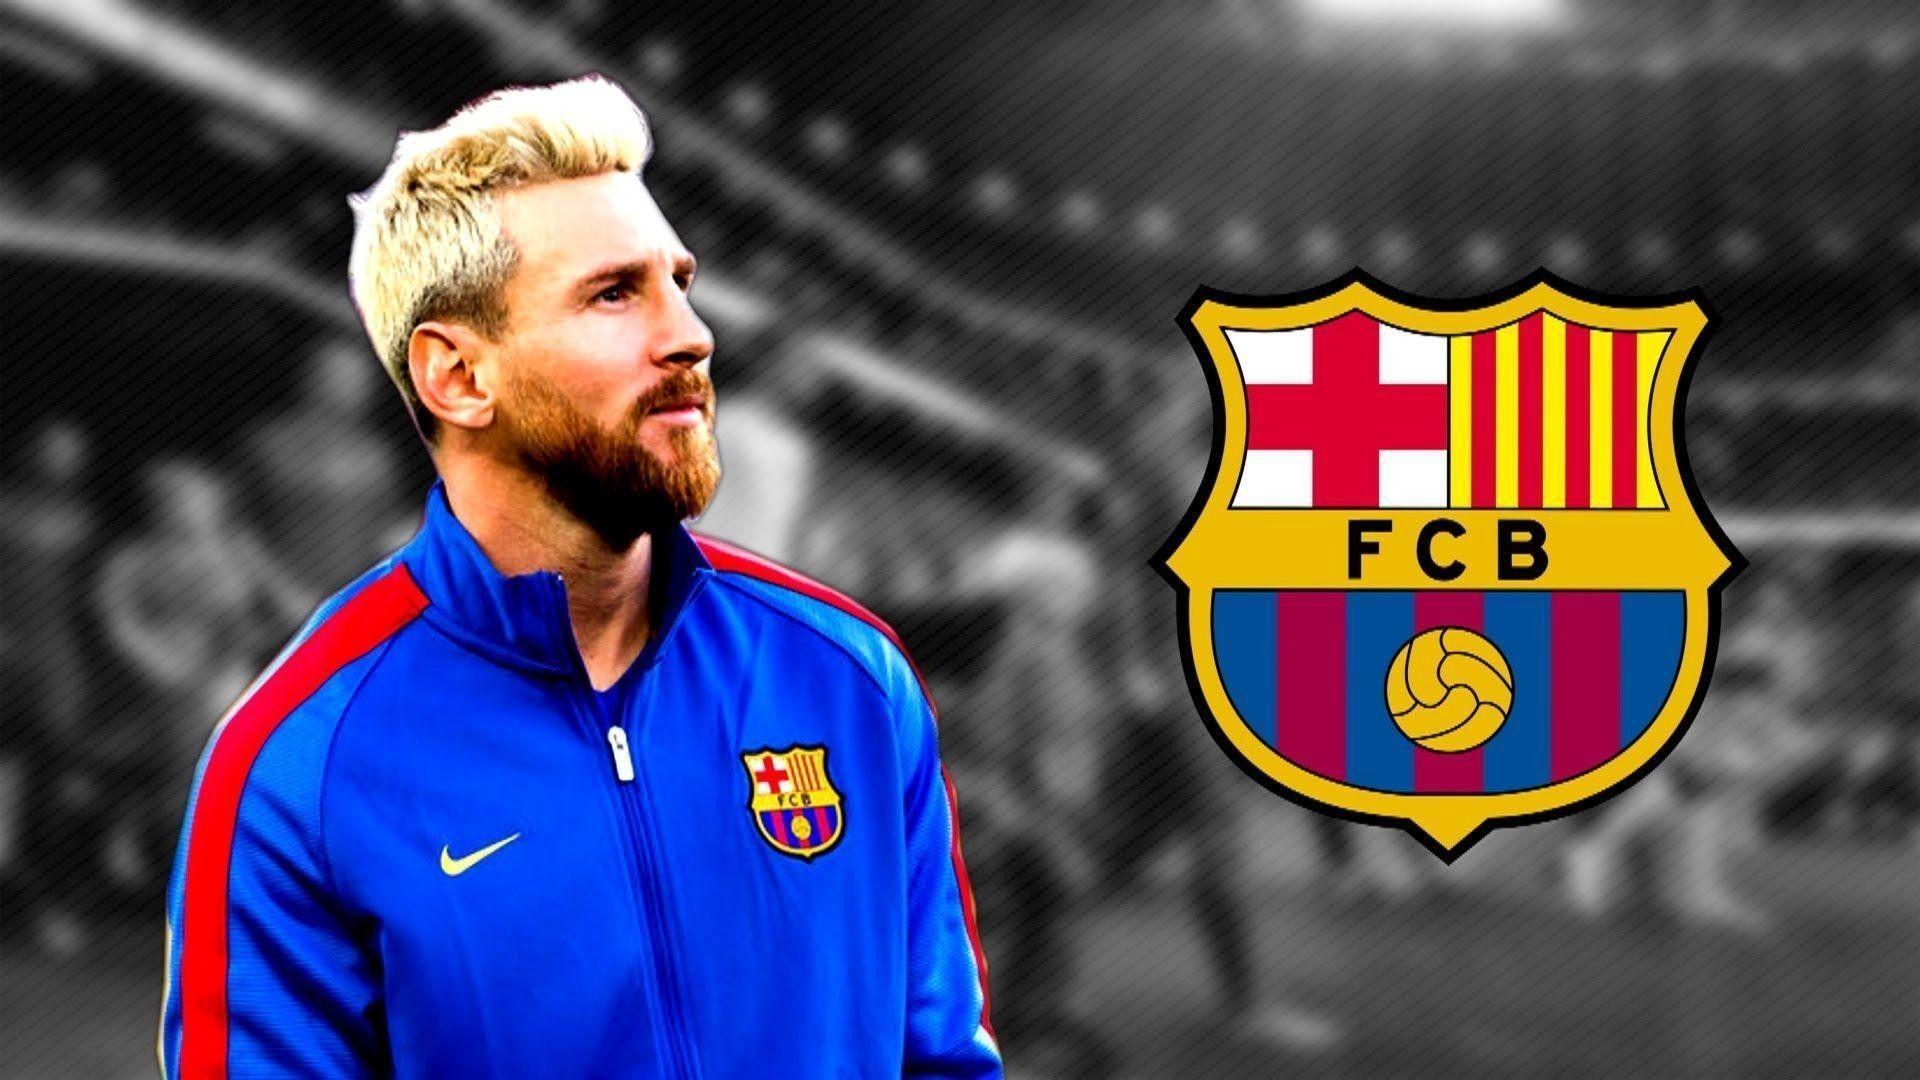 Lionel Messi 2018 Wallpaper HD 1080p